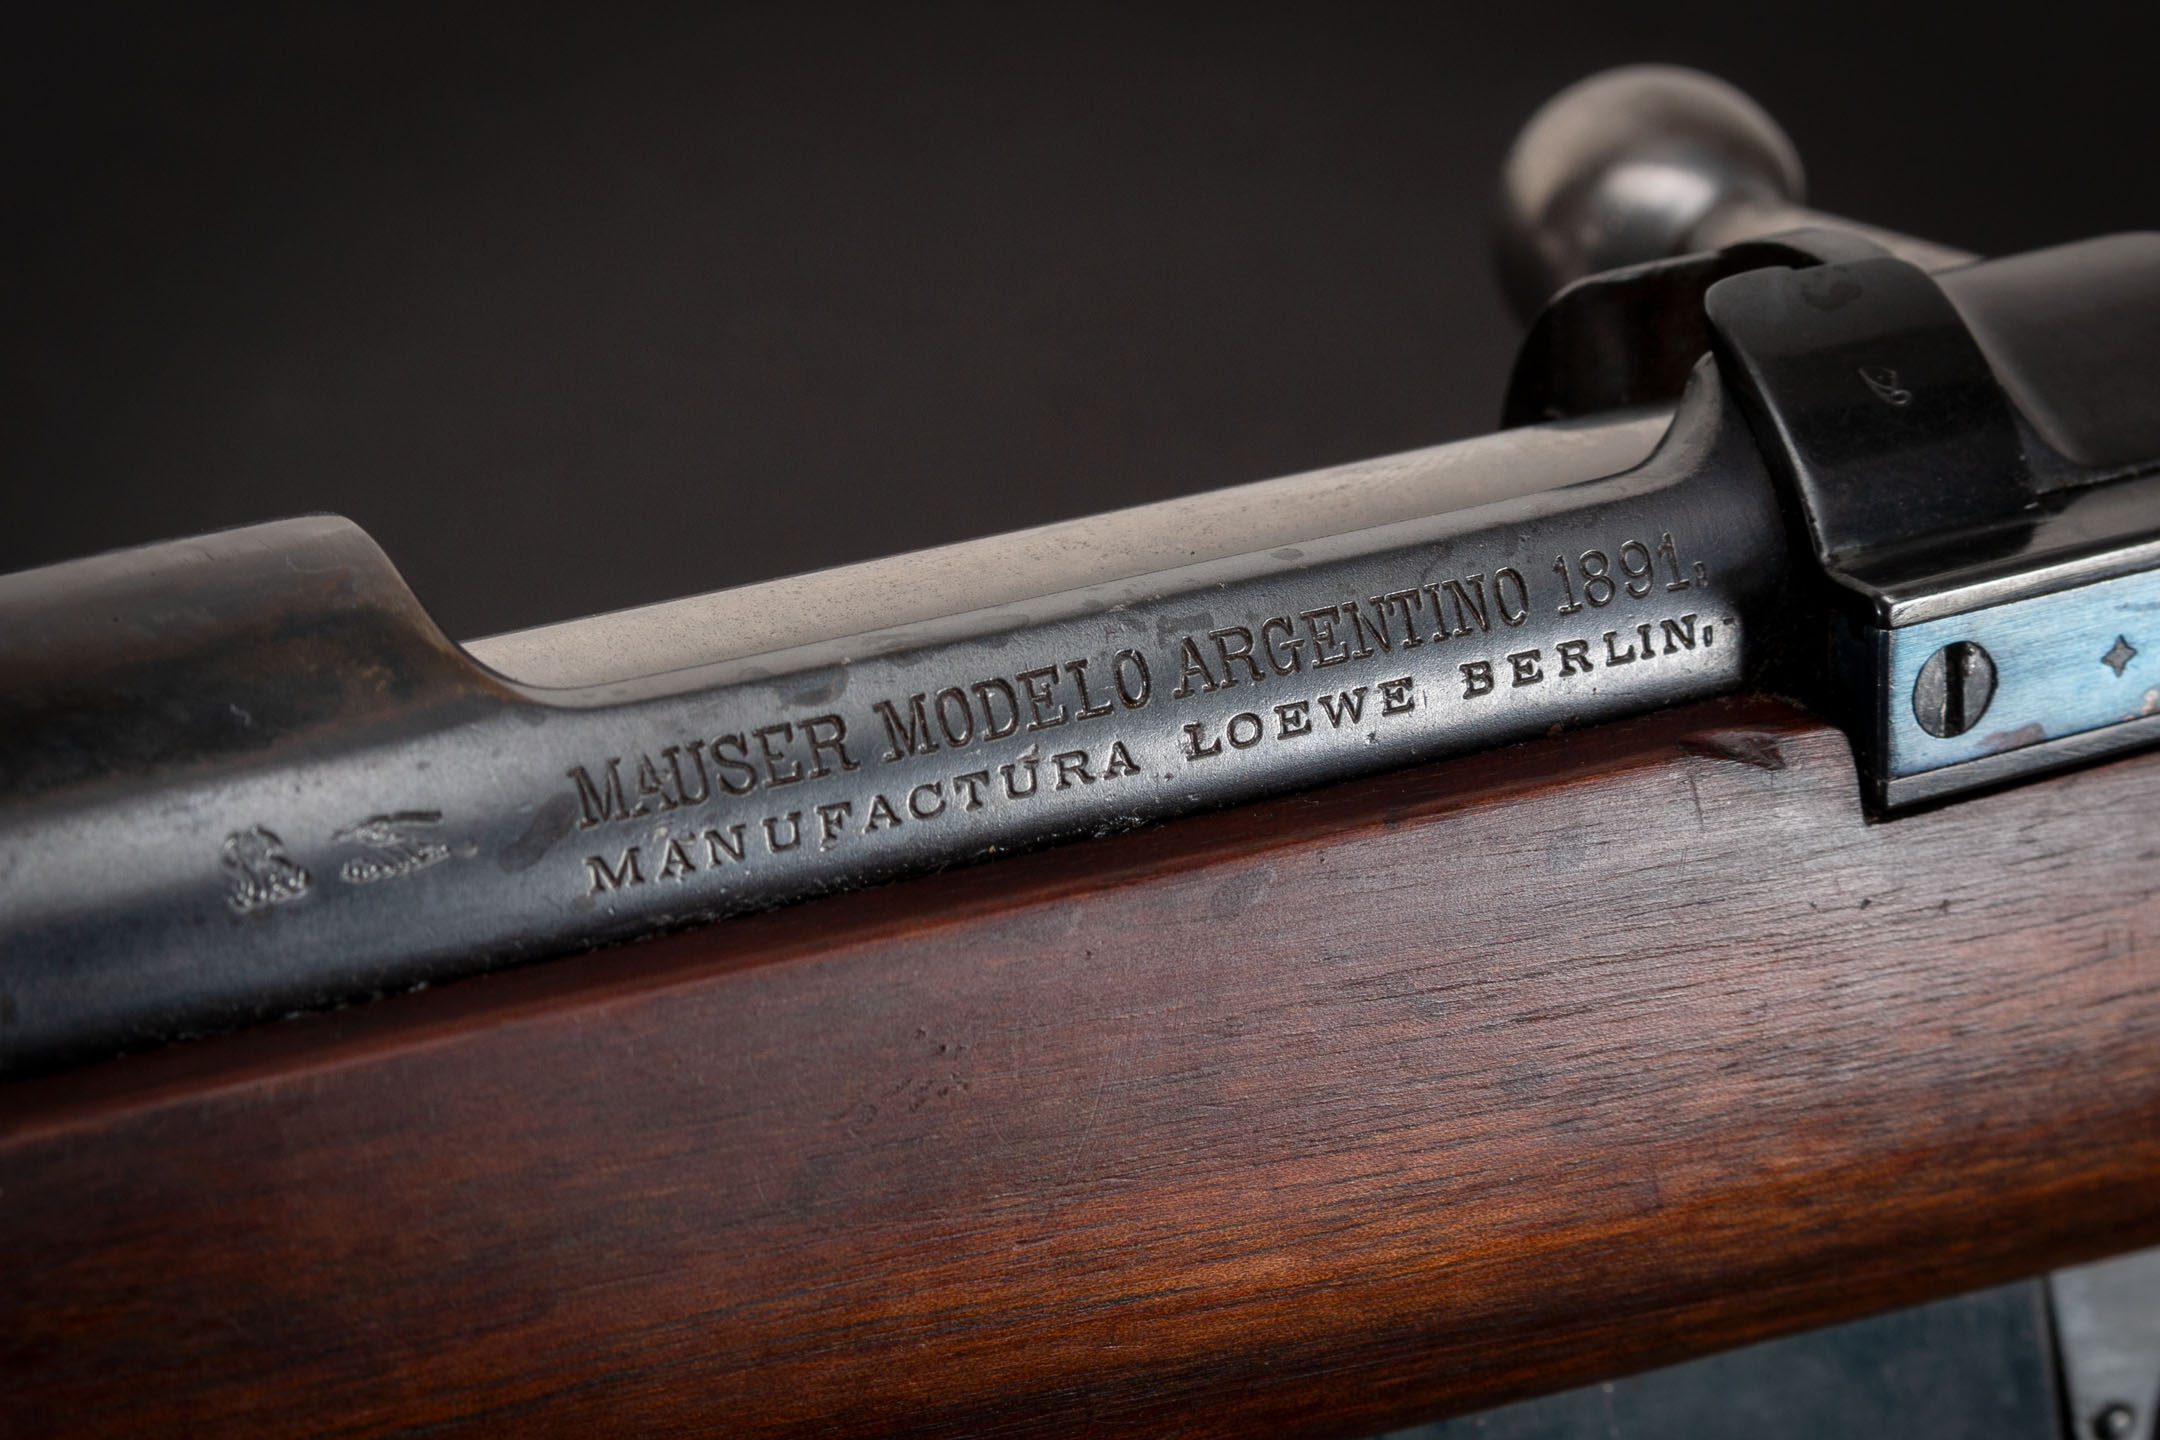 Mauser Modelo Argentino 1891 for Sale - Turnbull Restoration